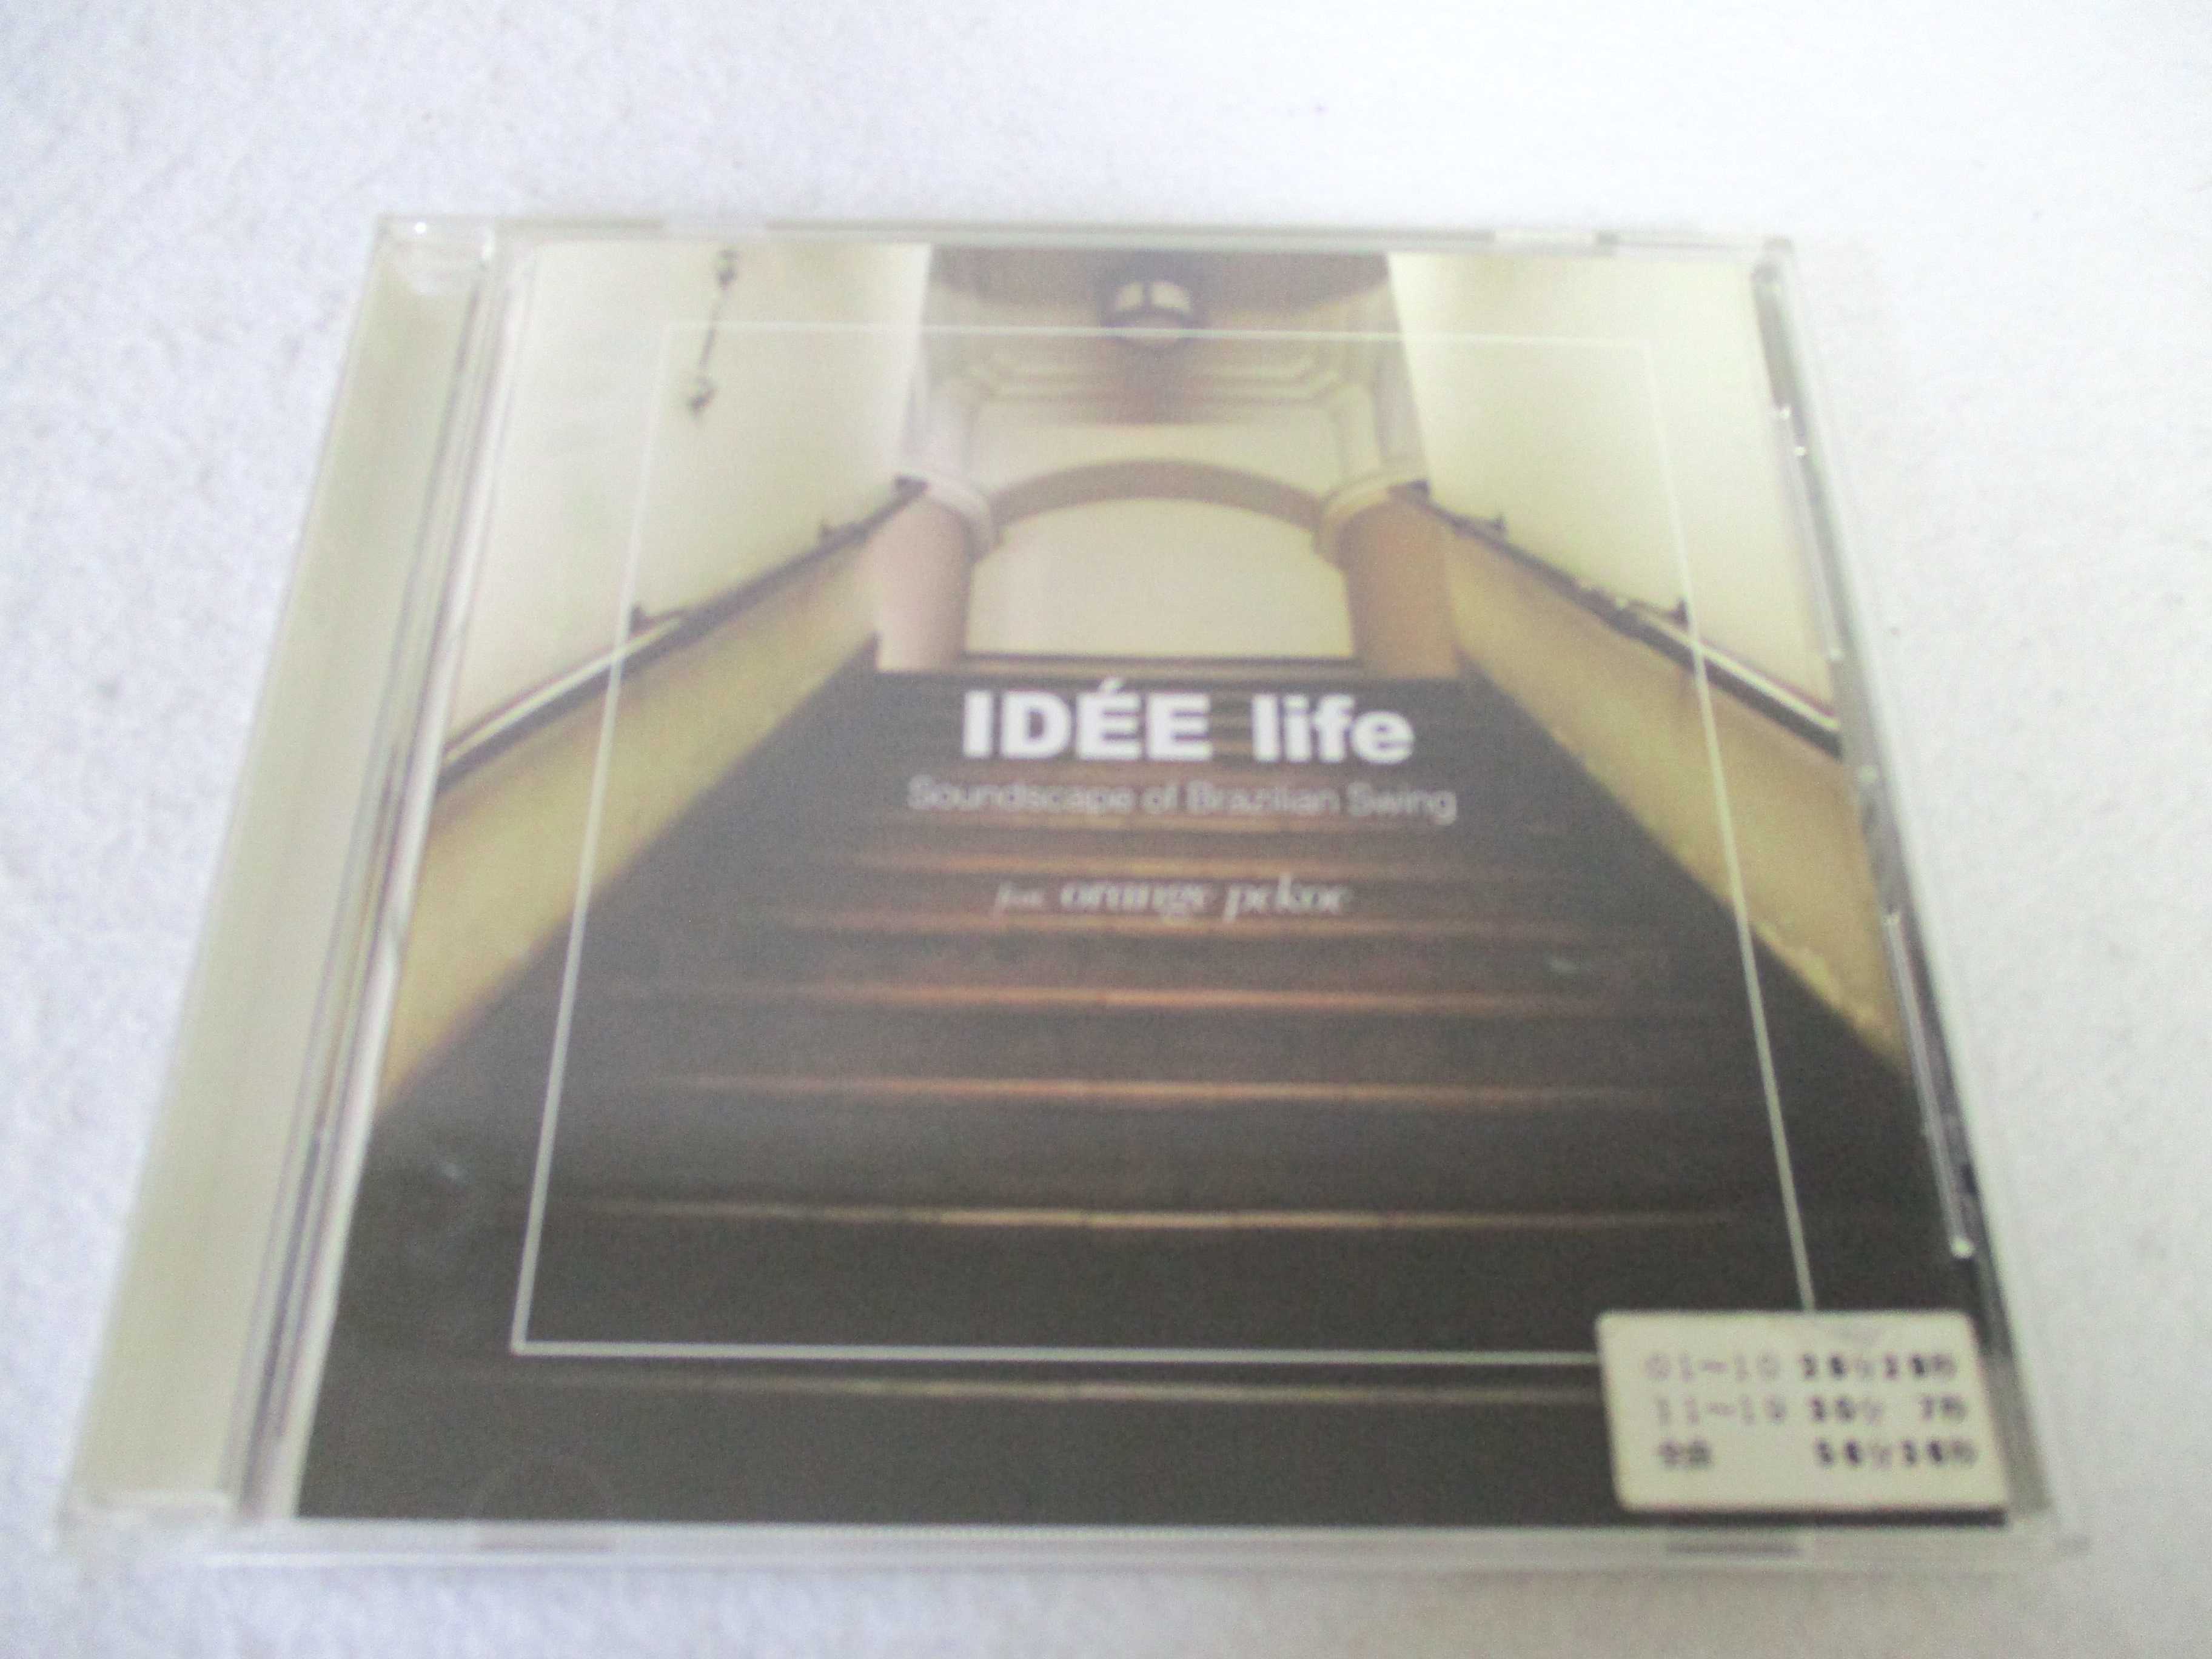 AC05212 š CD IDEE life Soundscape of BrazilianSwing feat. Orange Pecoe/˥Х